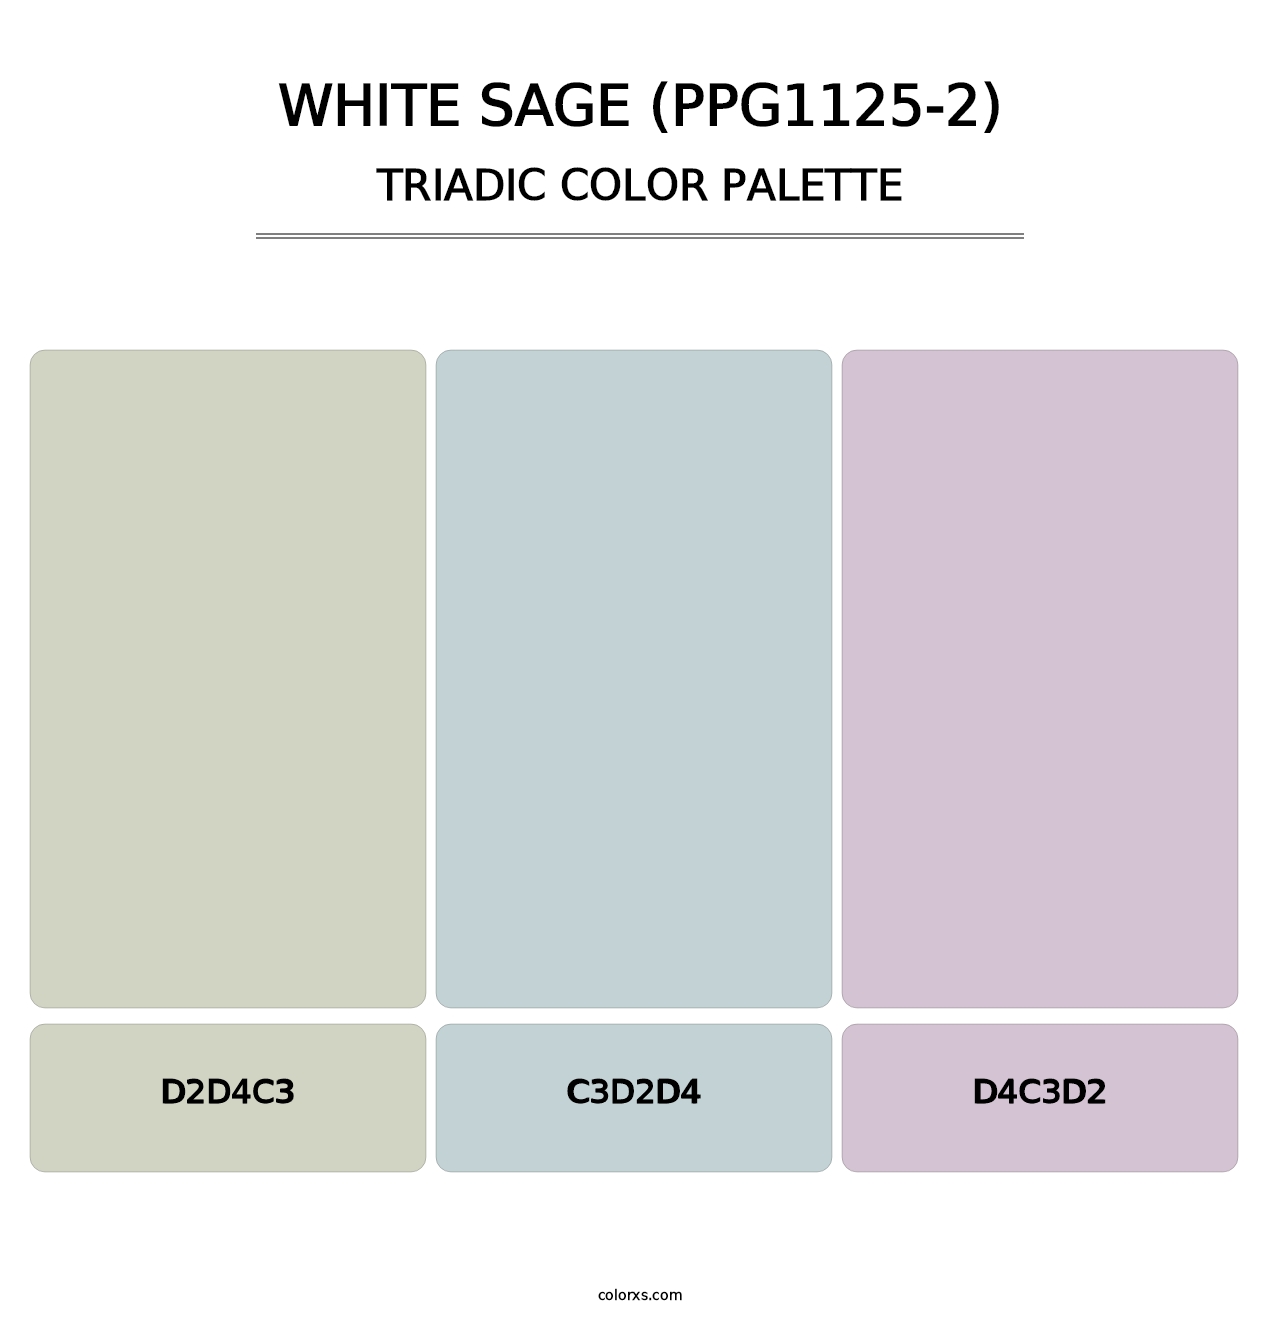 White Sage (PPG1125-2) - Triadic Color Palette